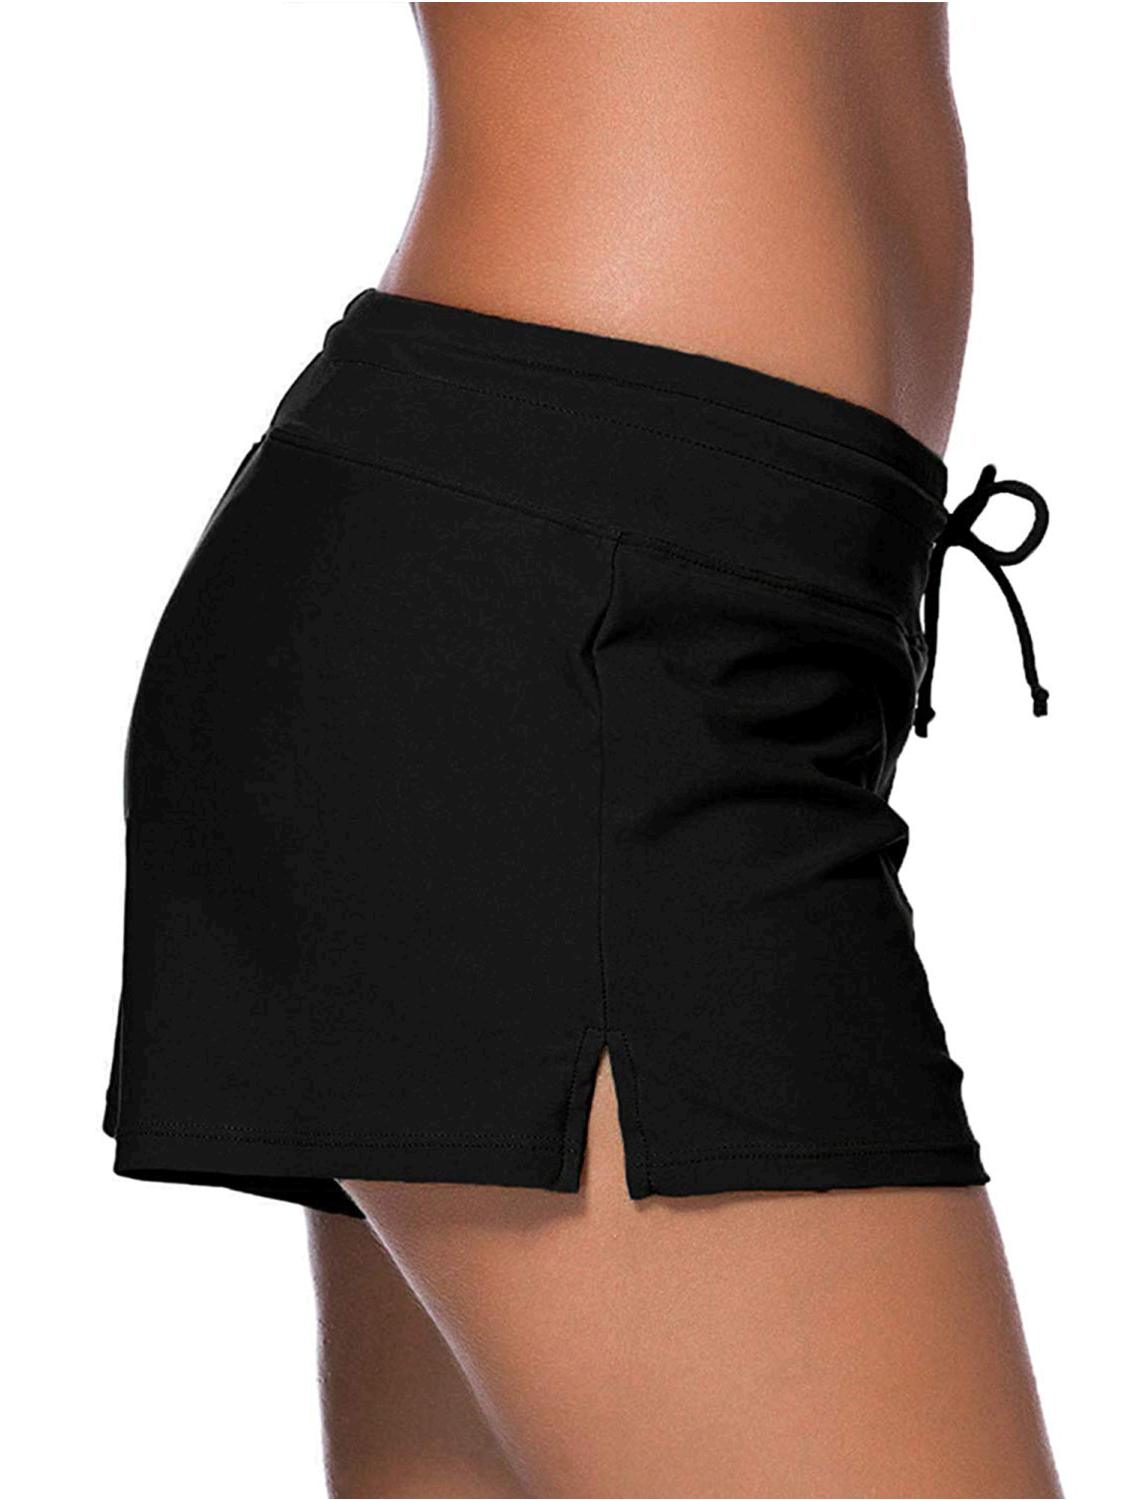 Satinior Women Swimsuit Shorts Tankini Swim Briefs Plus Black 2 Size 